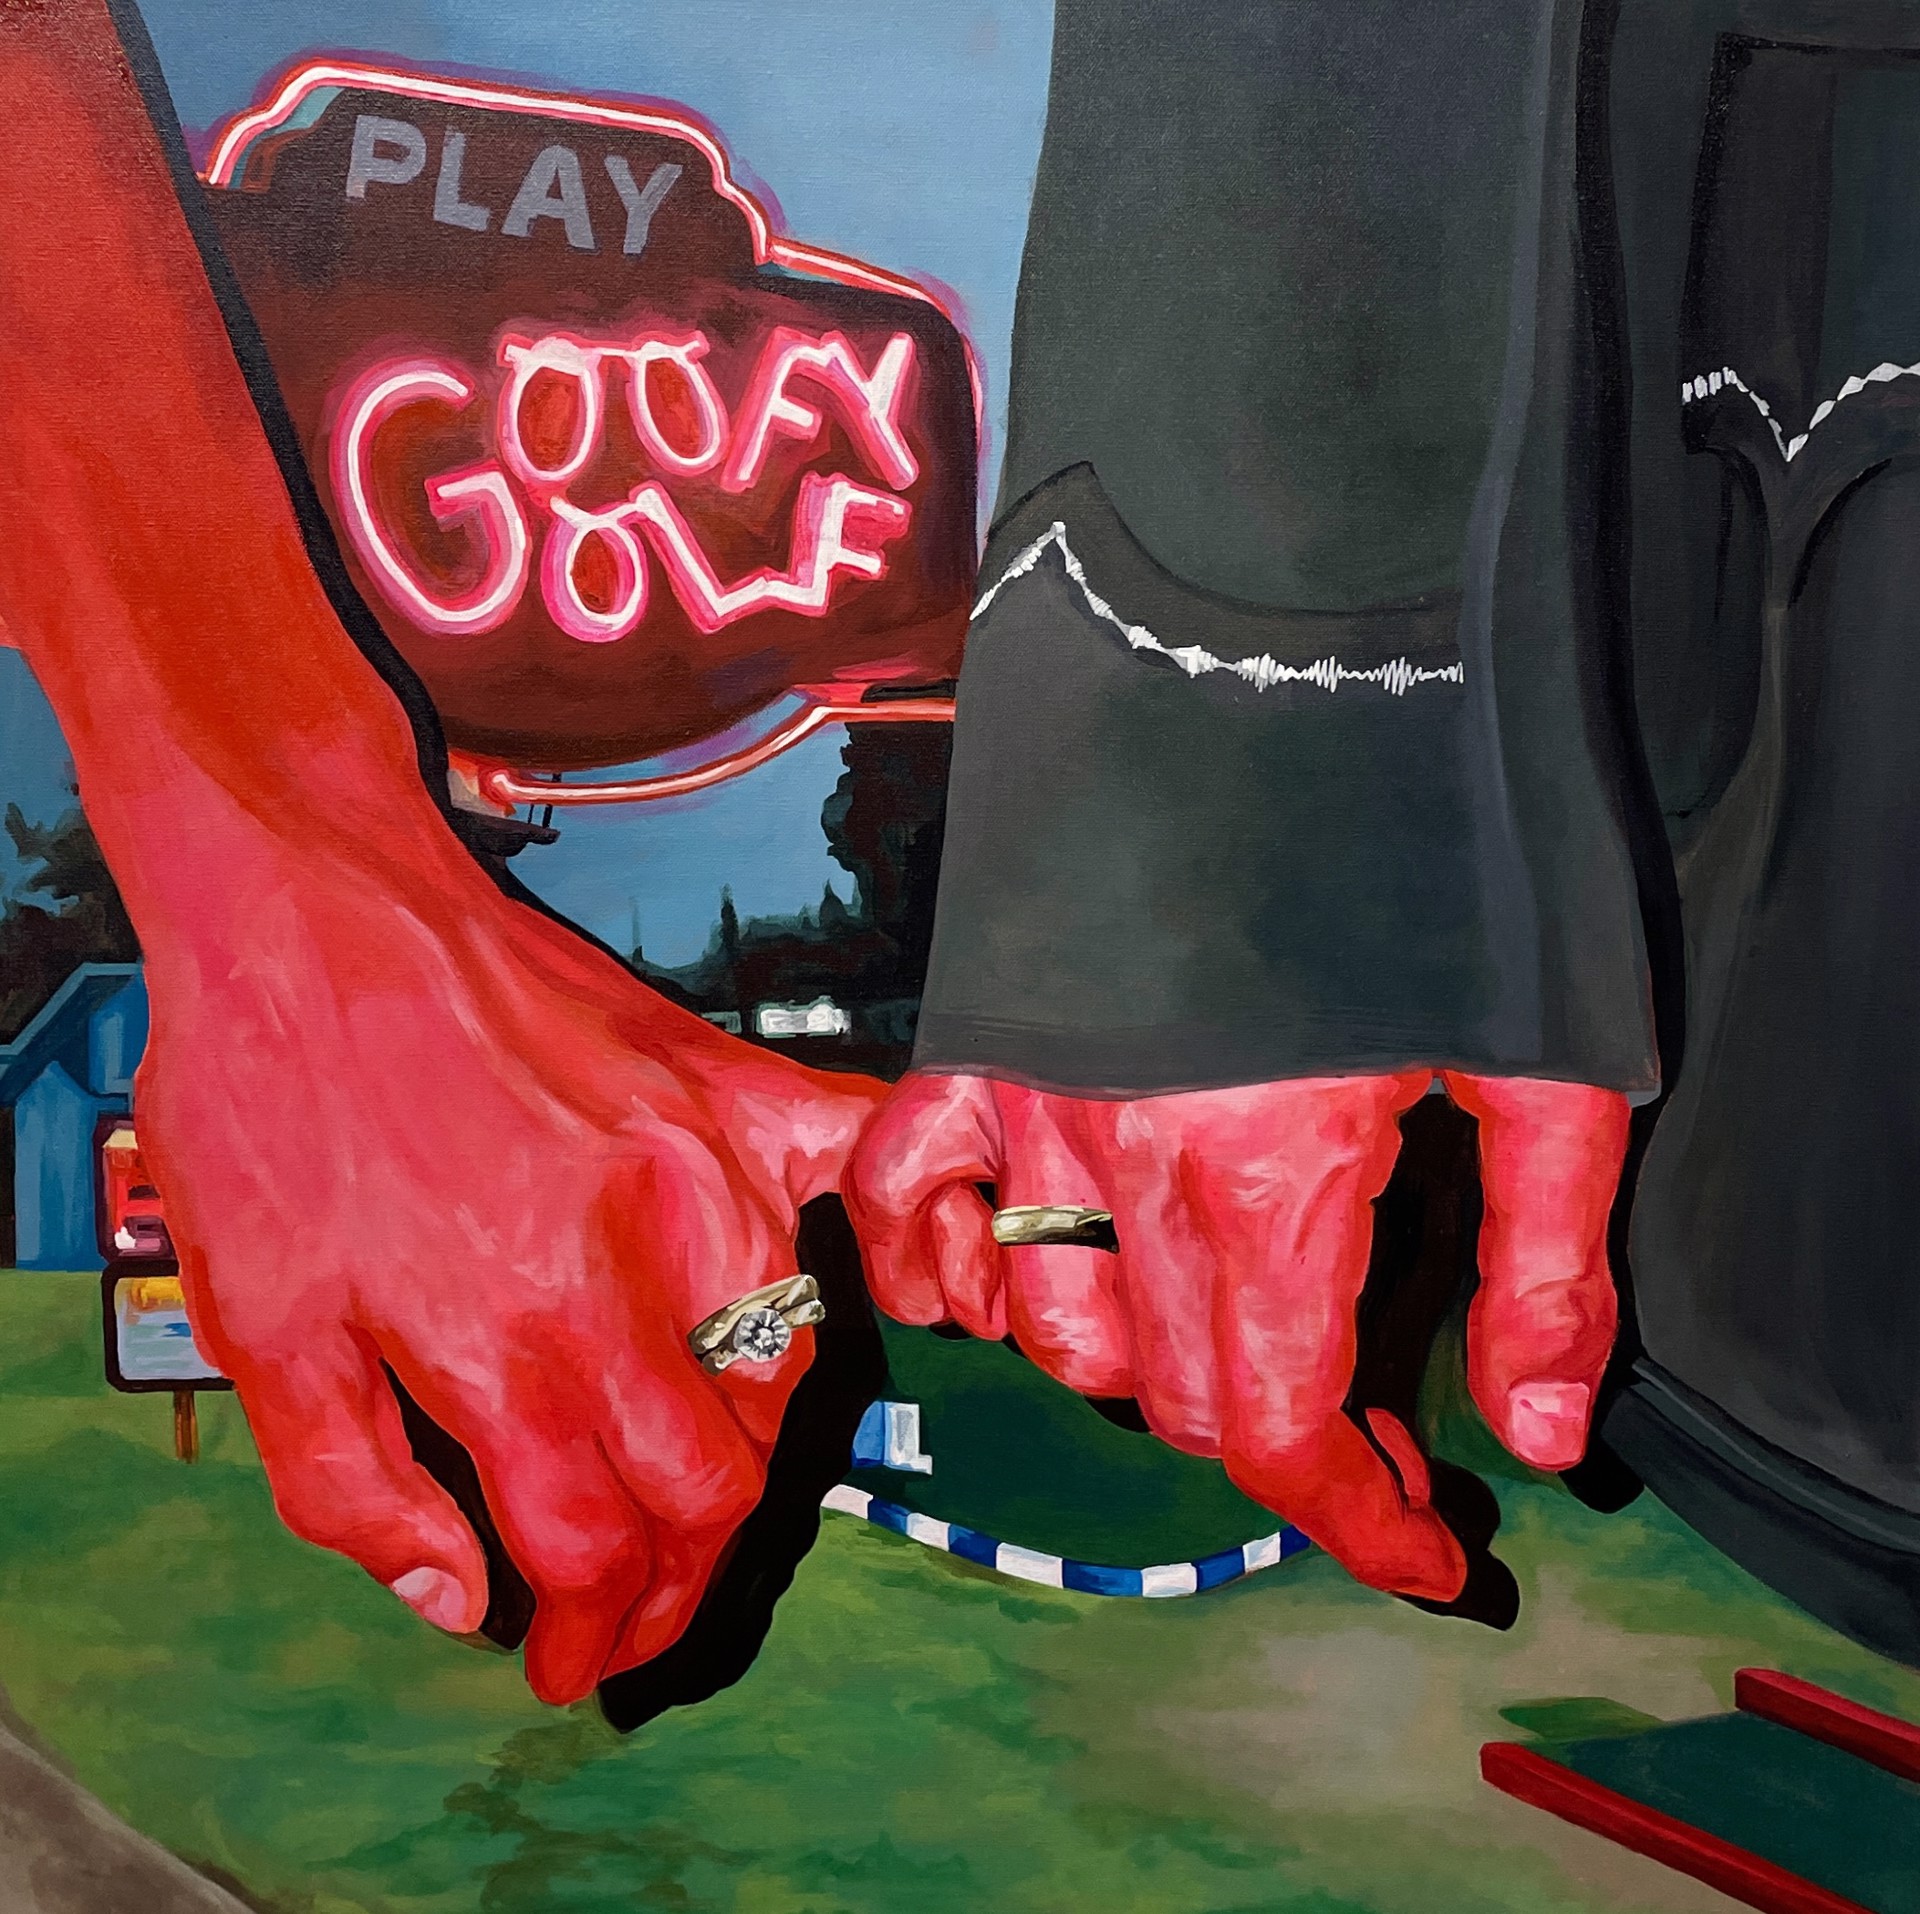 Goofy Golf by Maggie Wollard